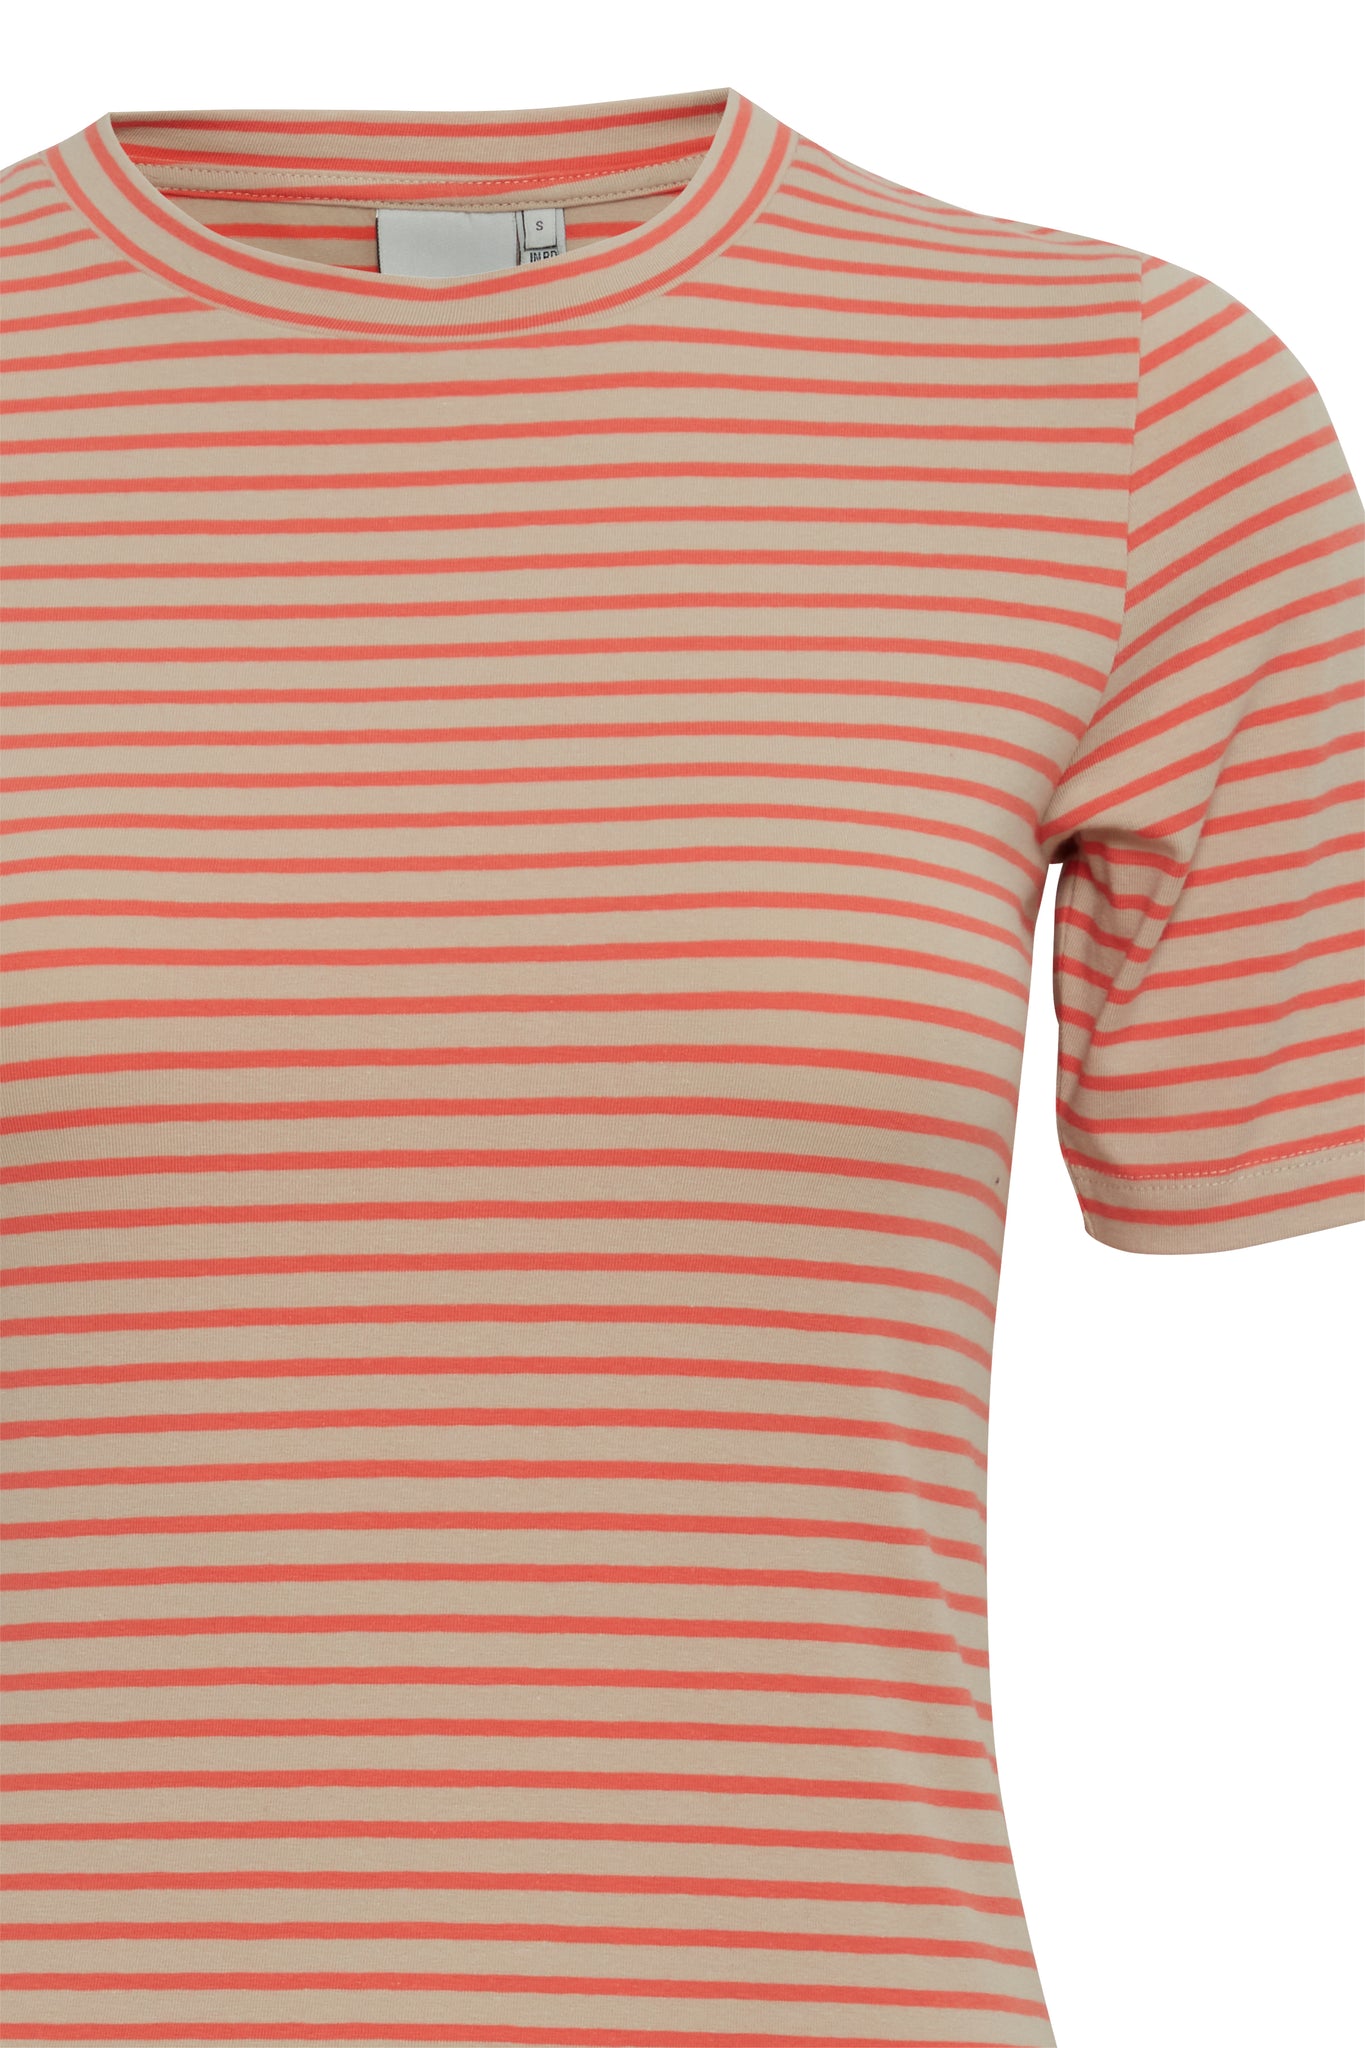 ICHI Mira Hot Coral Stripes T-Shirt